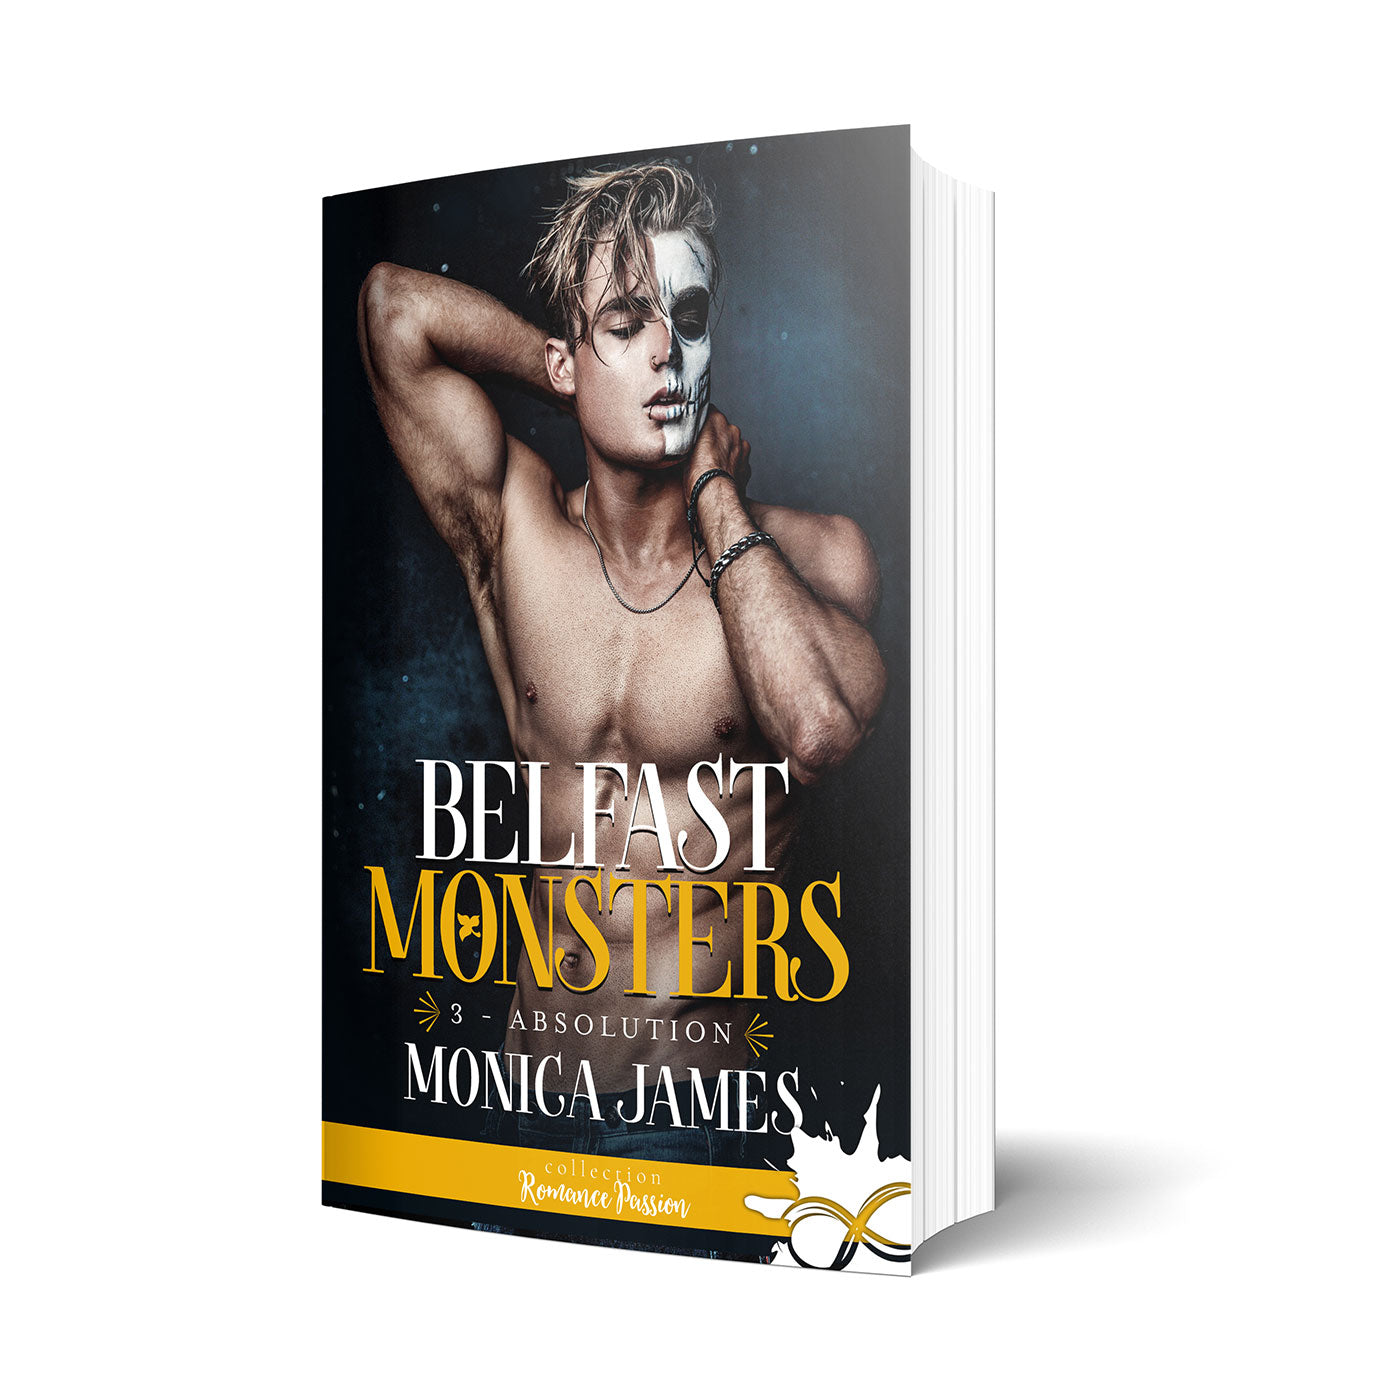 Monica James Belfast monsters Absolution